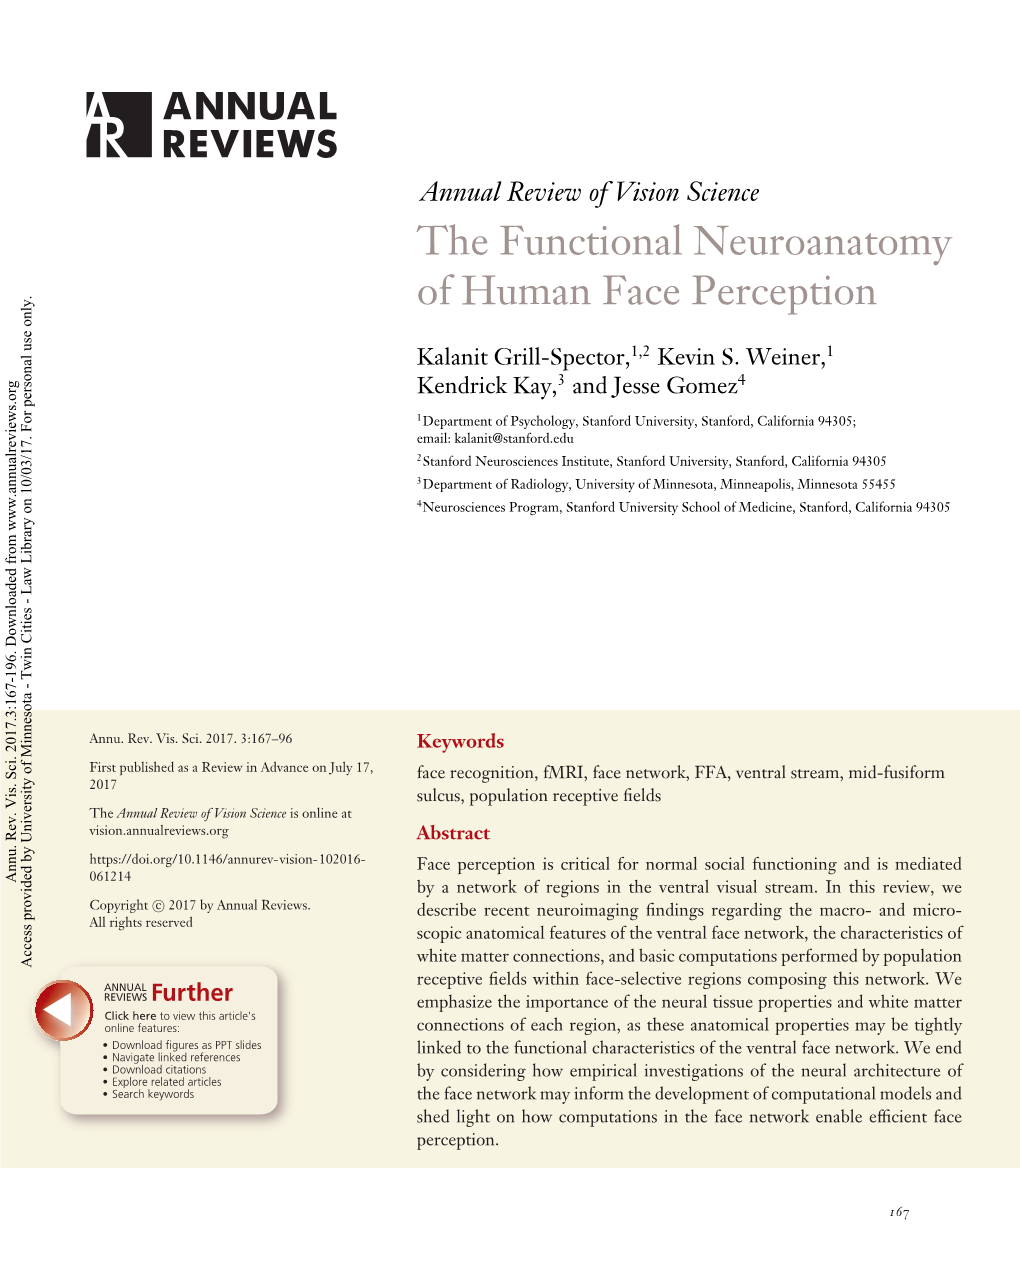 The Functional Neuroanatomy of Human Face Perception